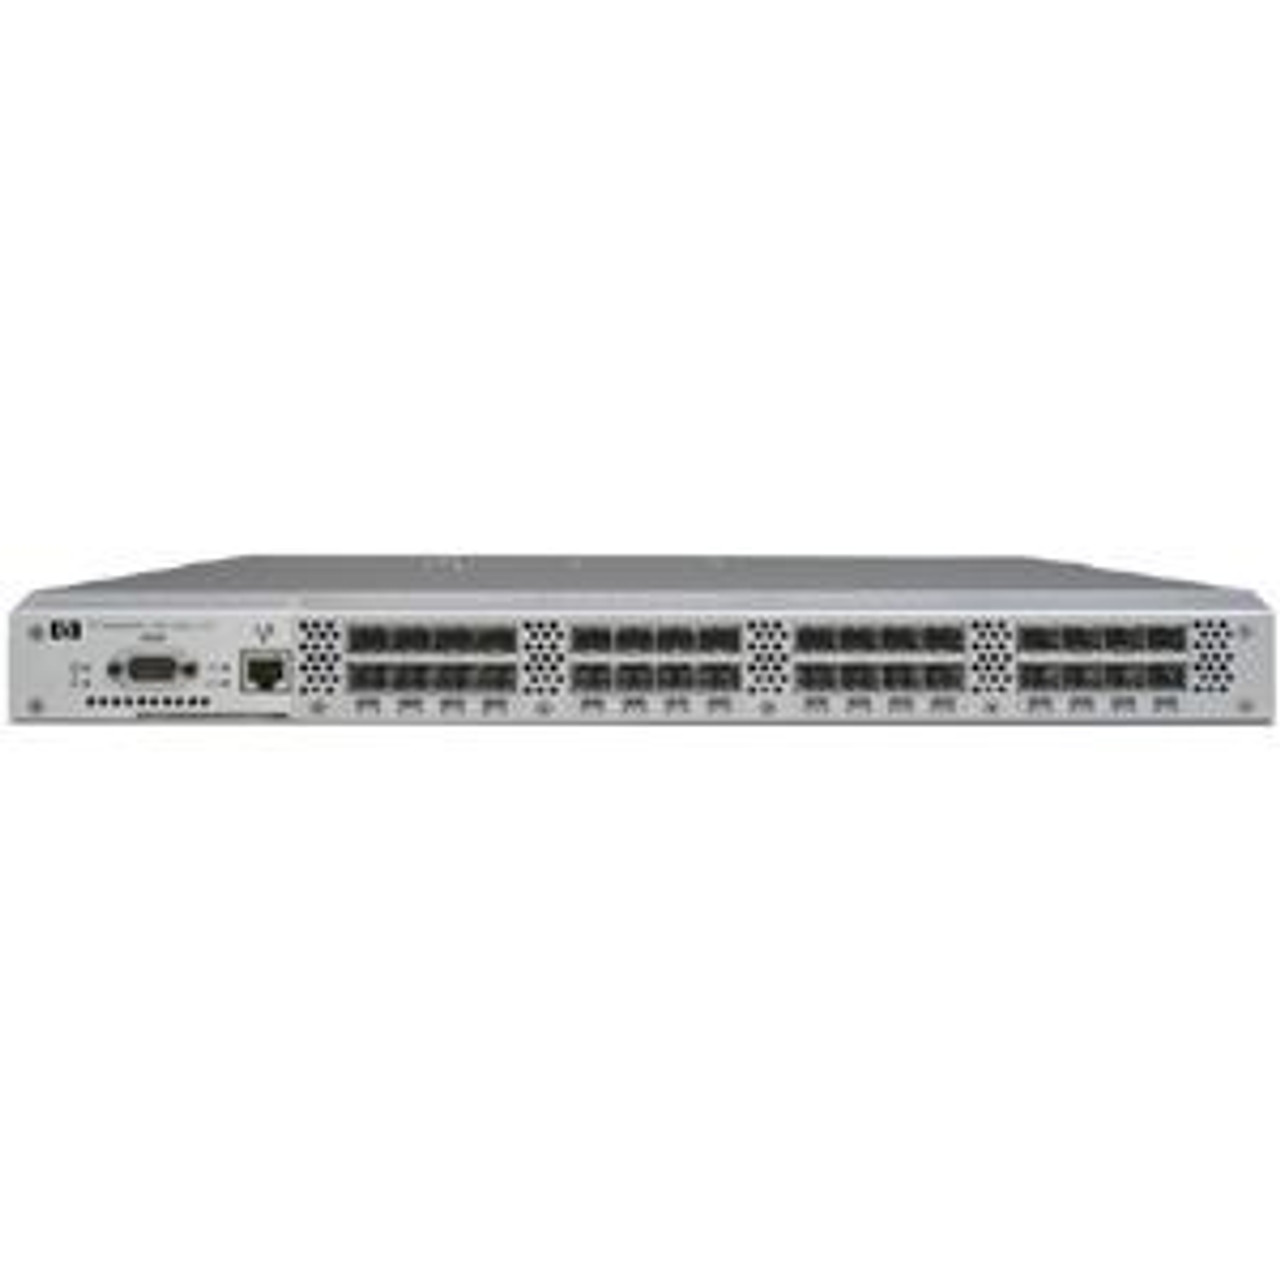 A7393AABA HP StorageWorks 4GB Fibre Channel SAN Switch 4/32-Ports with Rails 32 x SFP (empty) 1U Rack-Mountable (Refurbished)